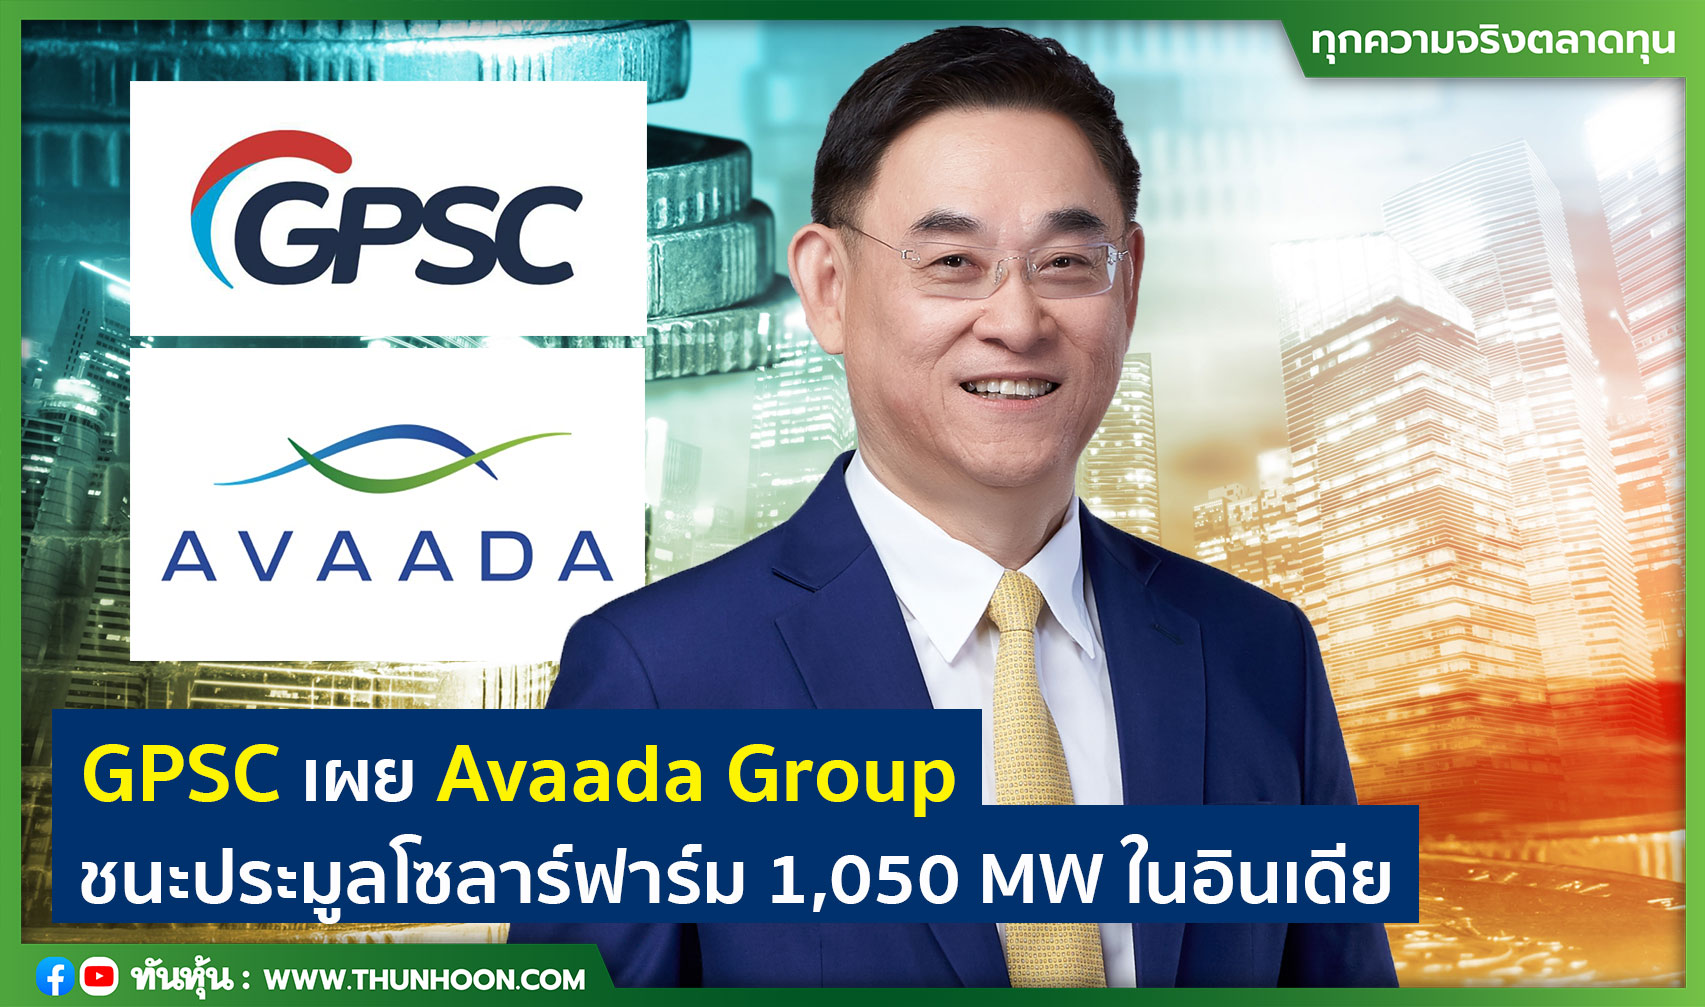 GPSC เผย Avaada Group ชนะประมูลโซลาร์ฟาร์ม 1,050 MW ในอินเดีย